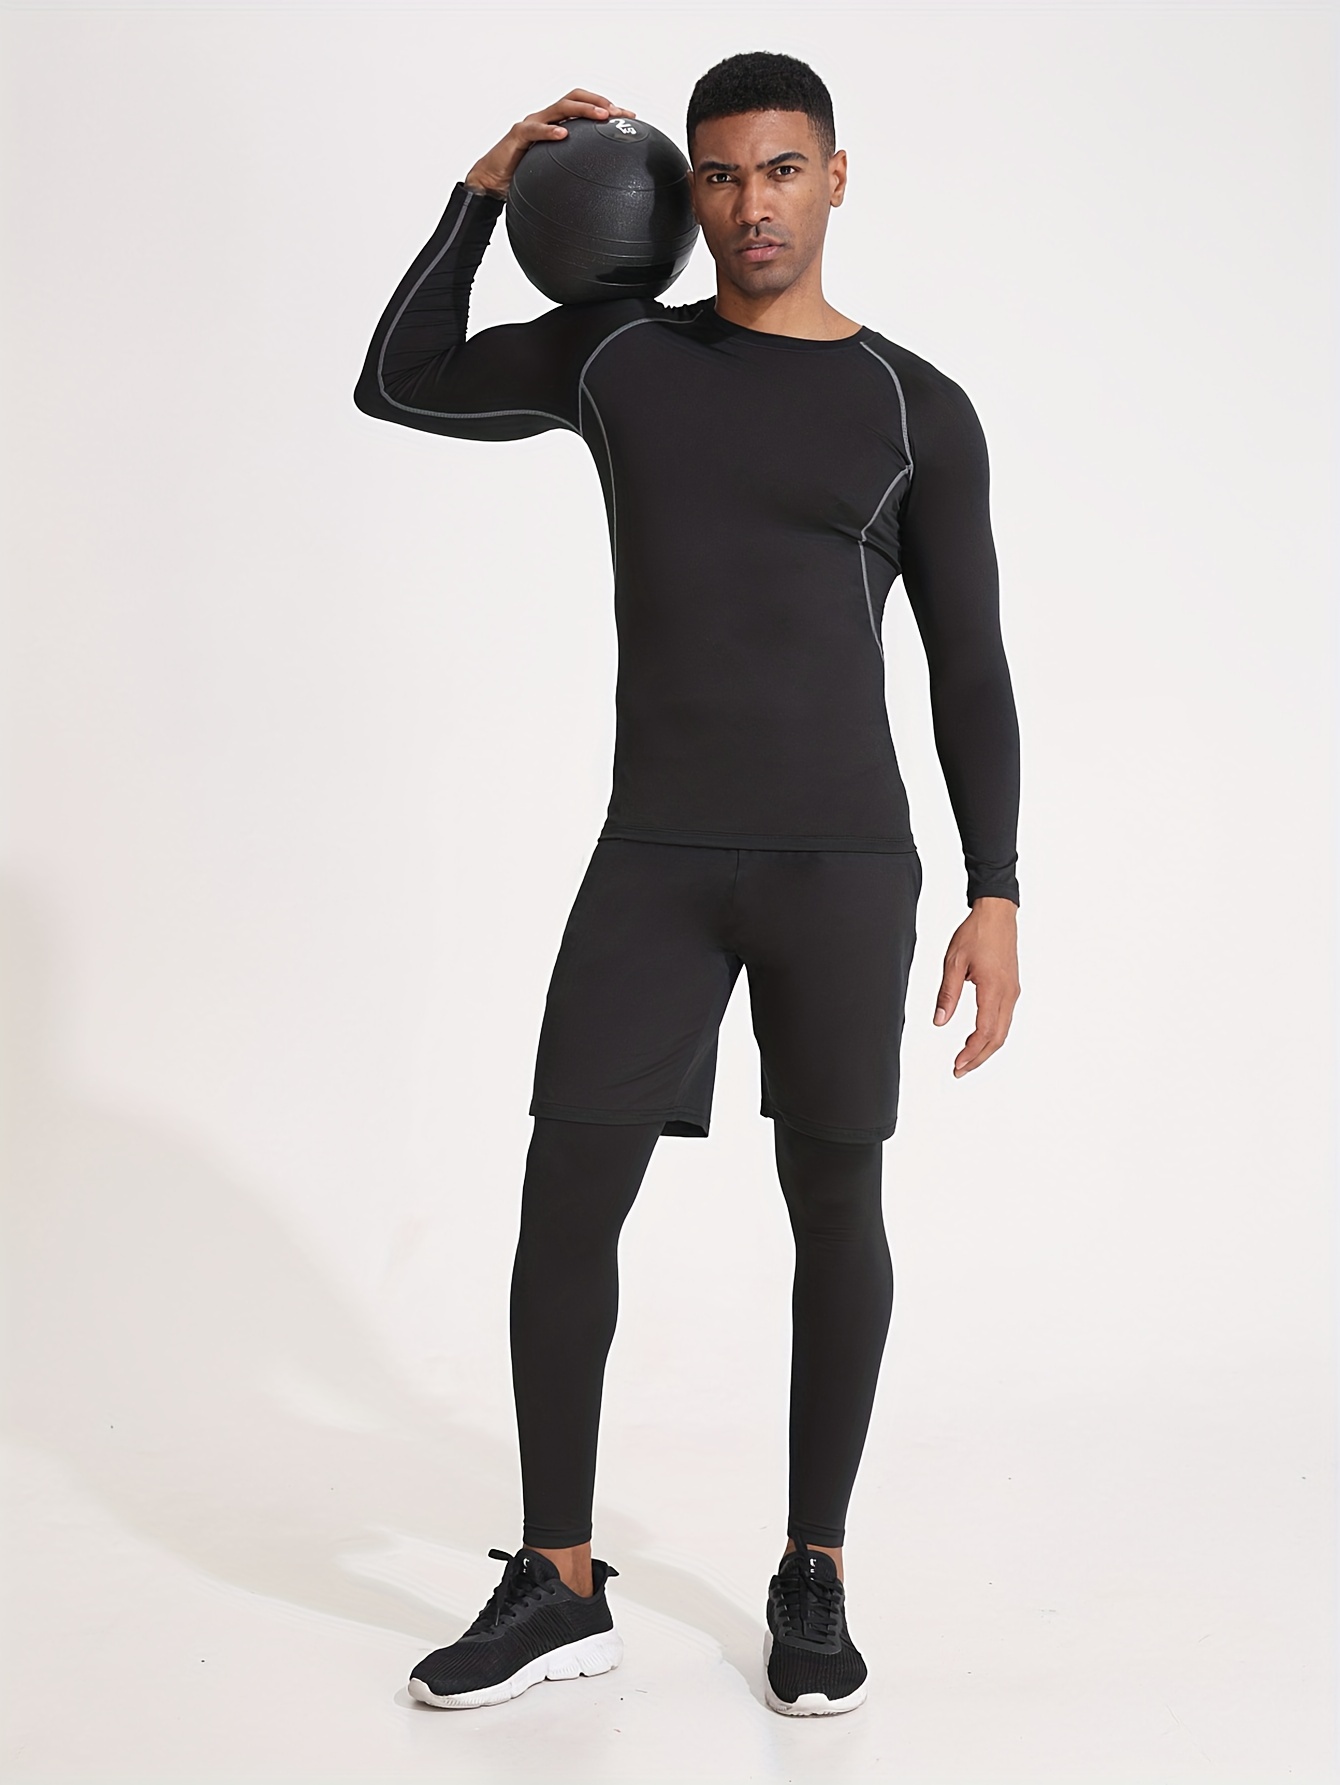 Body-sculpting Jumpsuit in black - Fashion lion